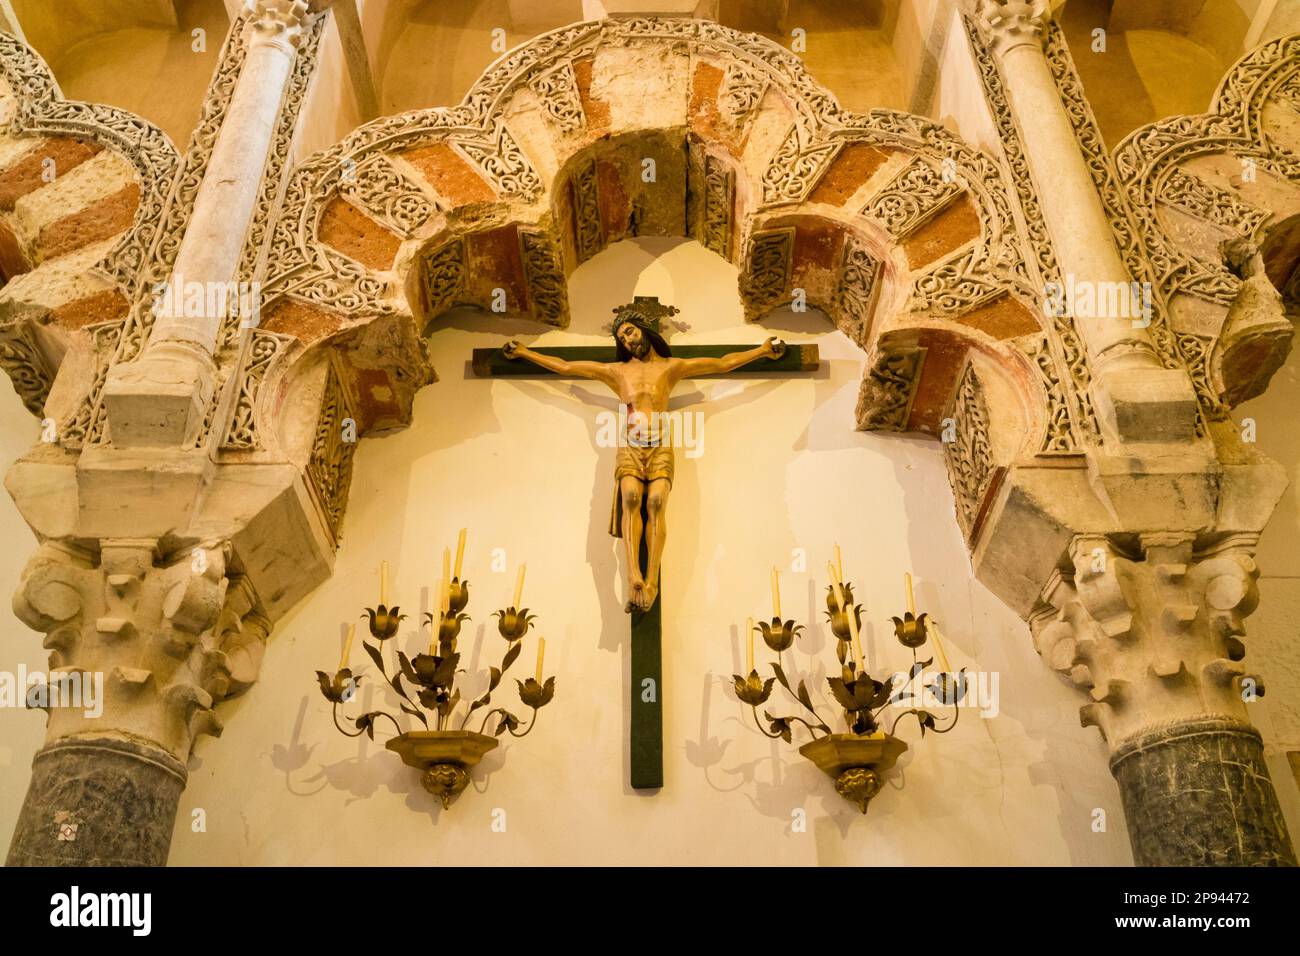 Motivo de crucifixión cristiana por debajo de elementos arquitectónicos moriscos. Interior de la Gran Mezquita de Córdoba o La Mezquita, Córdoba, Provincia de Córdoba, Foto de stock